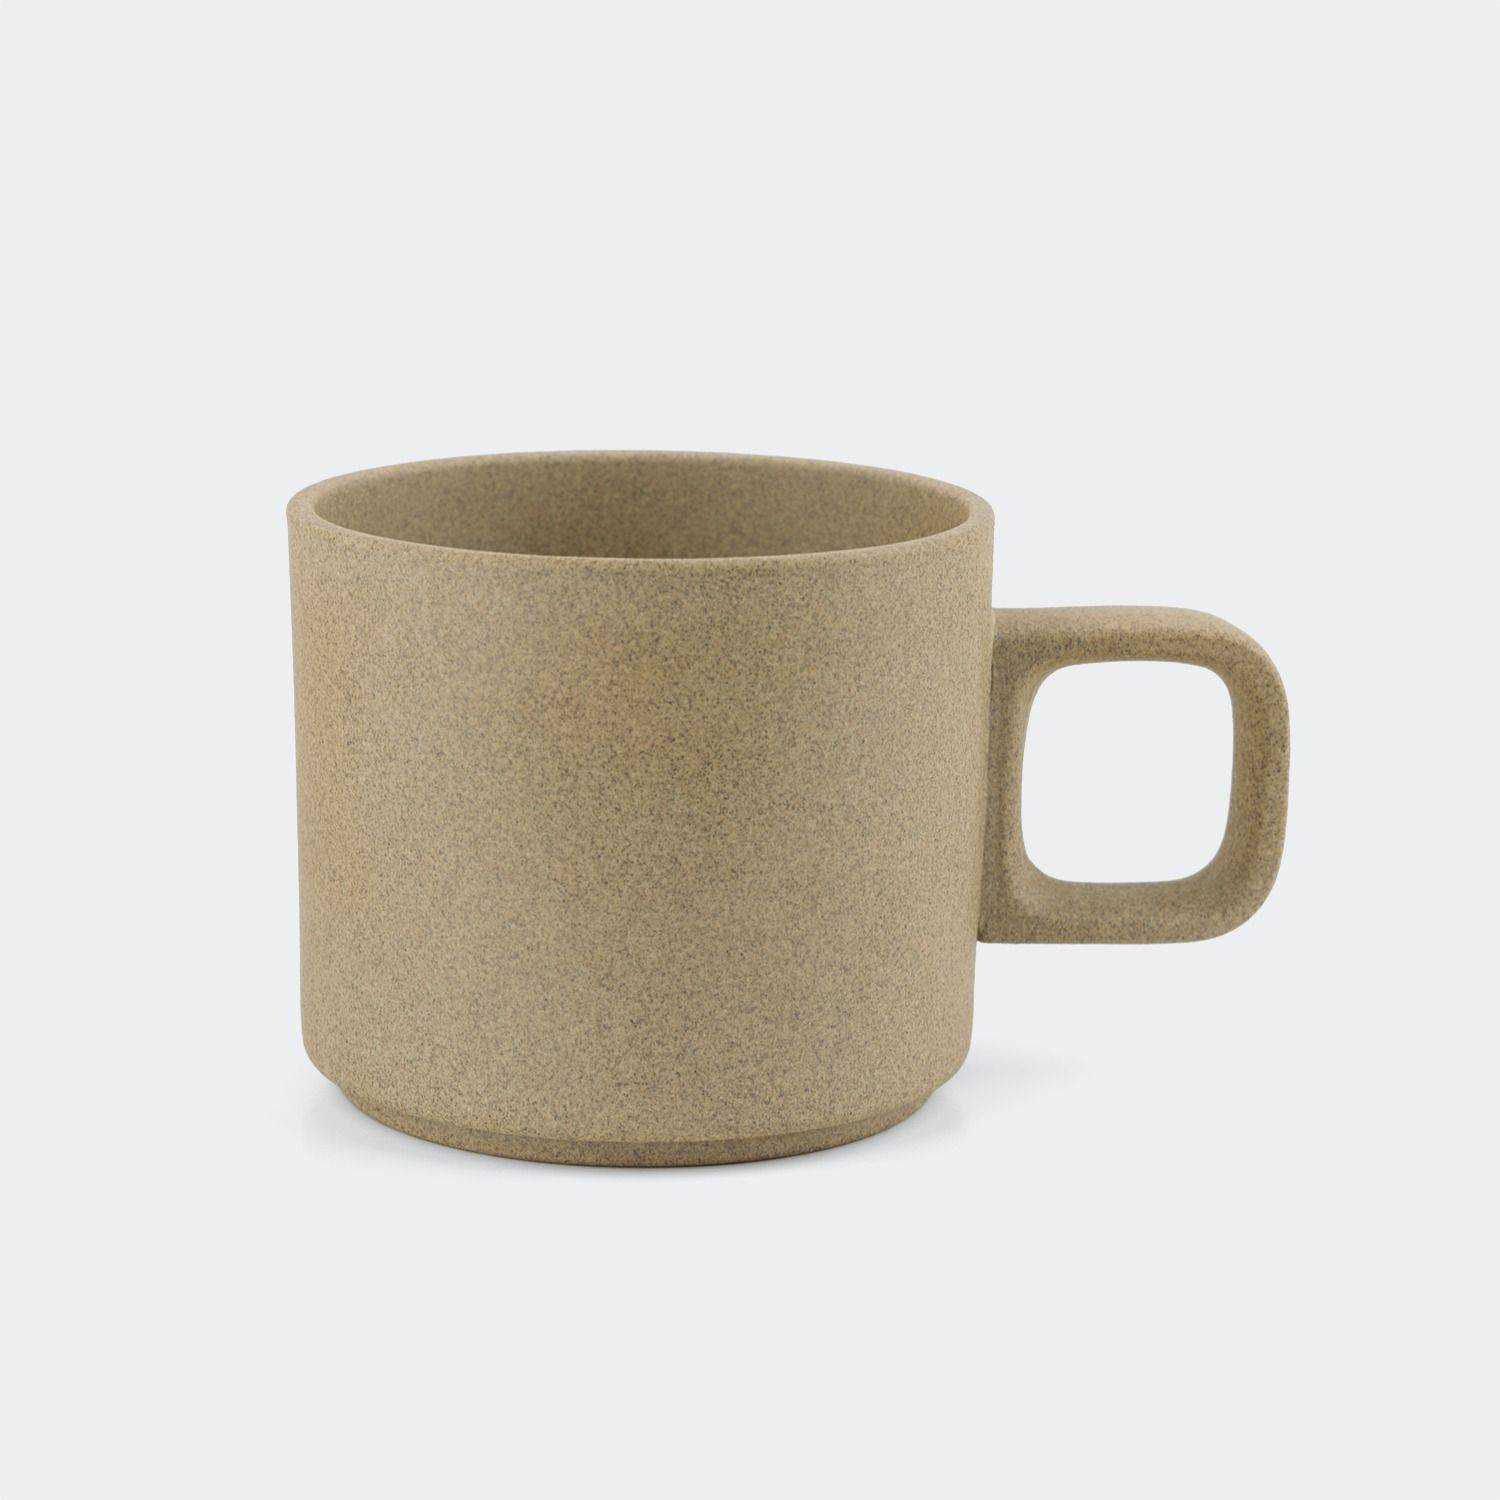 Hasami Porcelain Mug in Natural 11 oz. - KANSO #select size_11 oz.